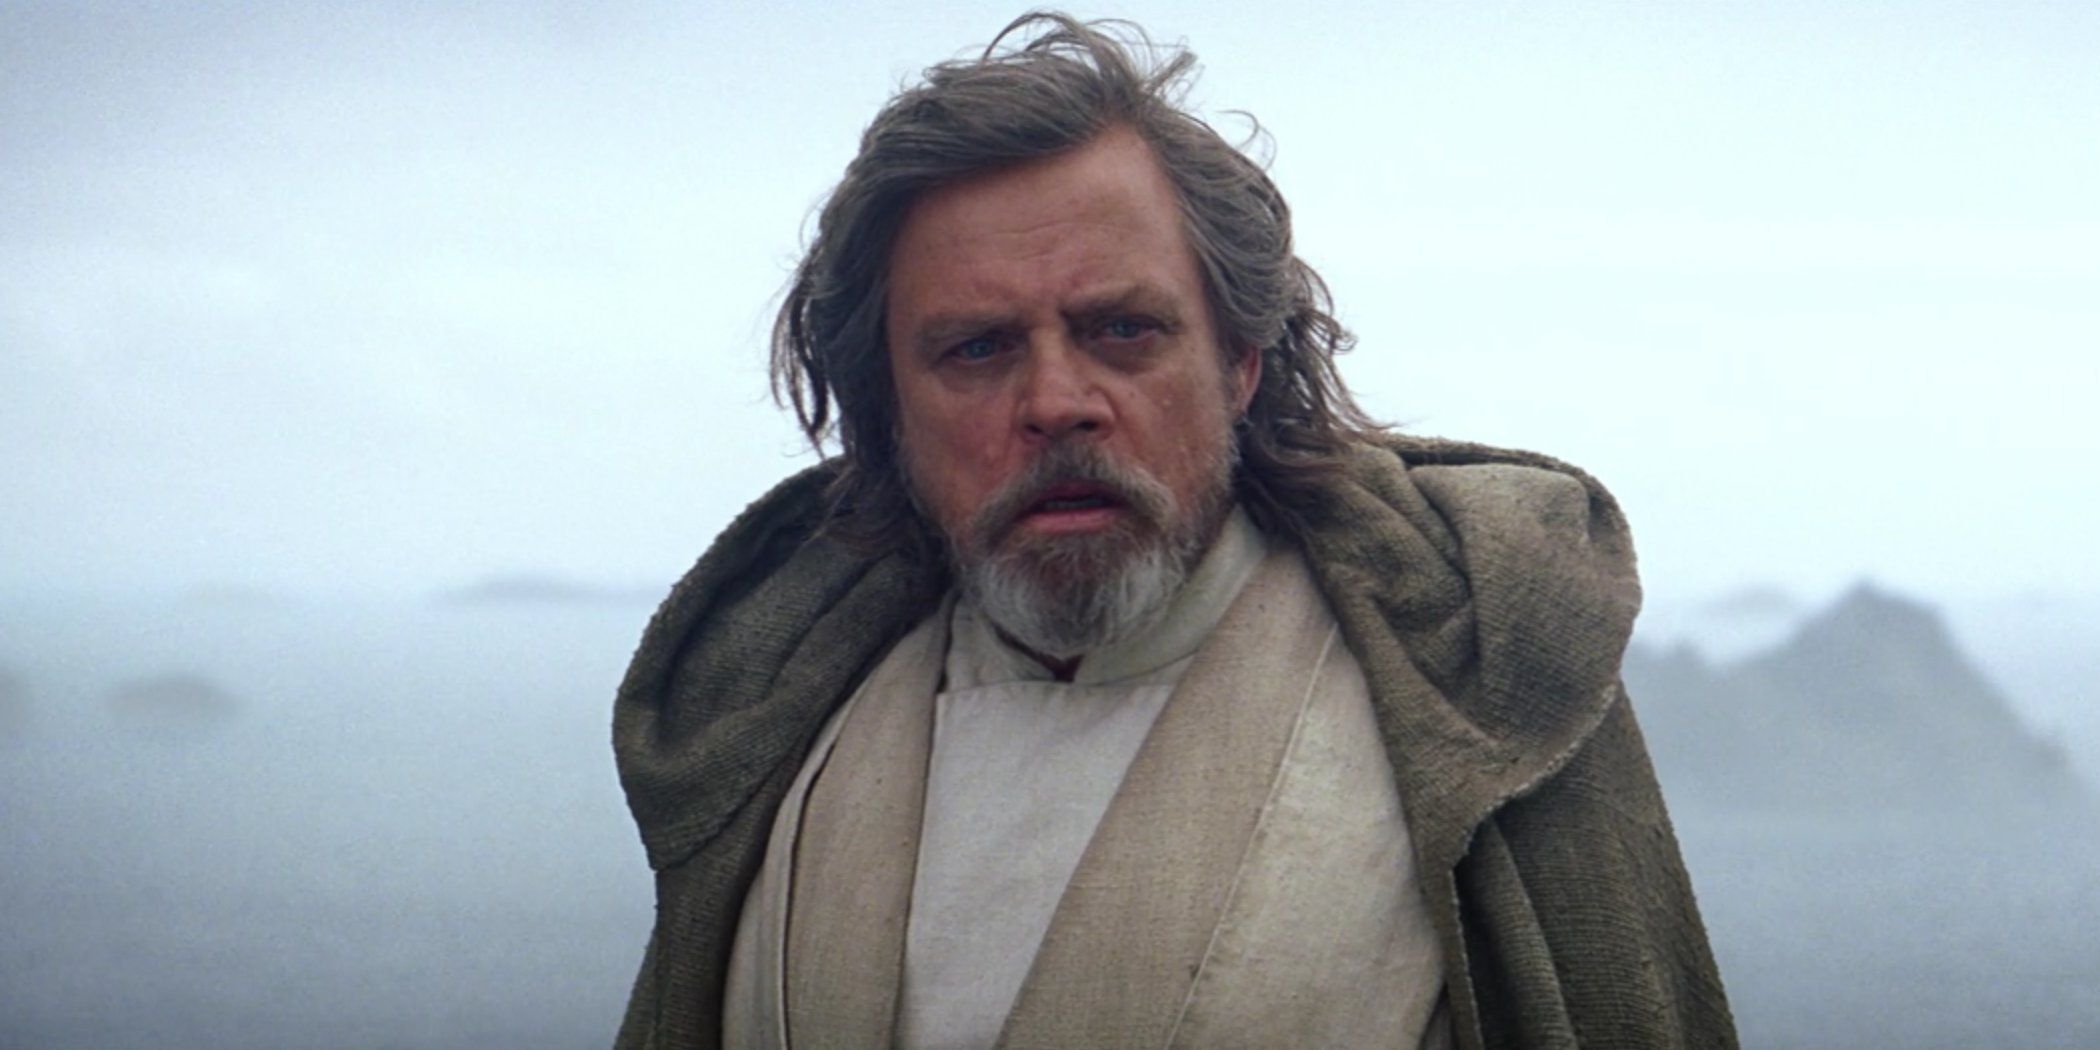 Luke Skywalker at the end of Star Wars The Force Awakens